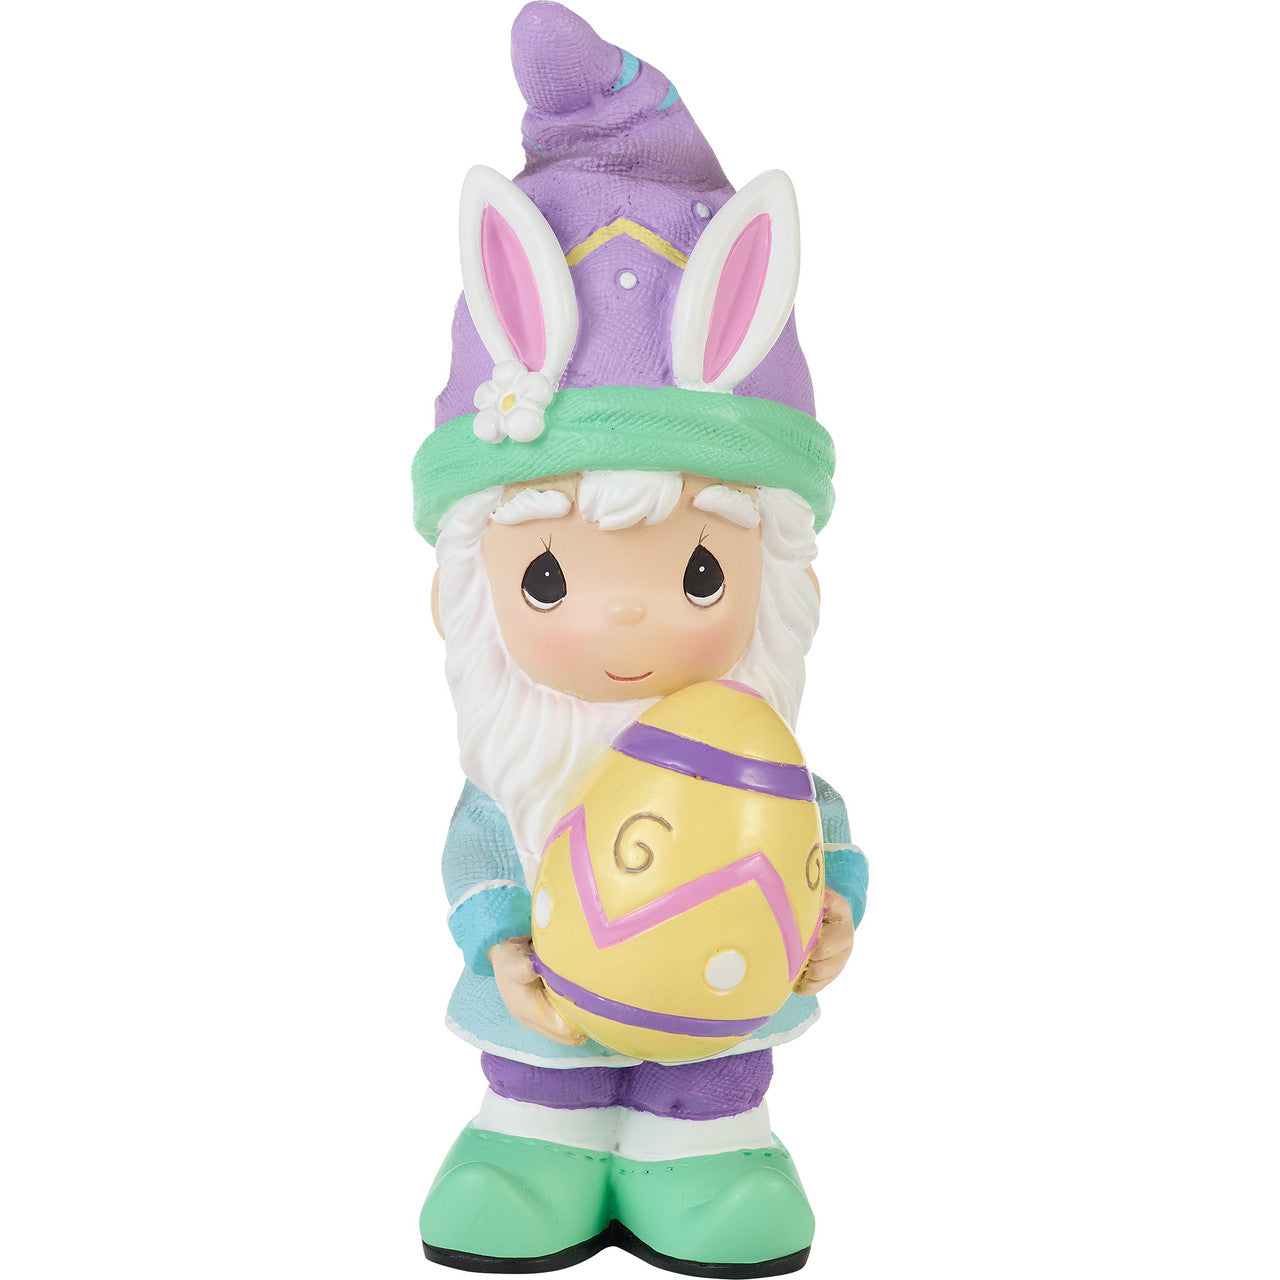 There's Gnome Bunny Like You Precious Moments Figurine